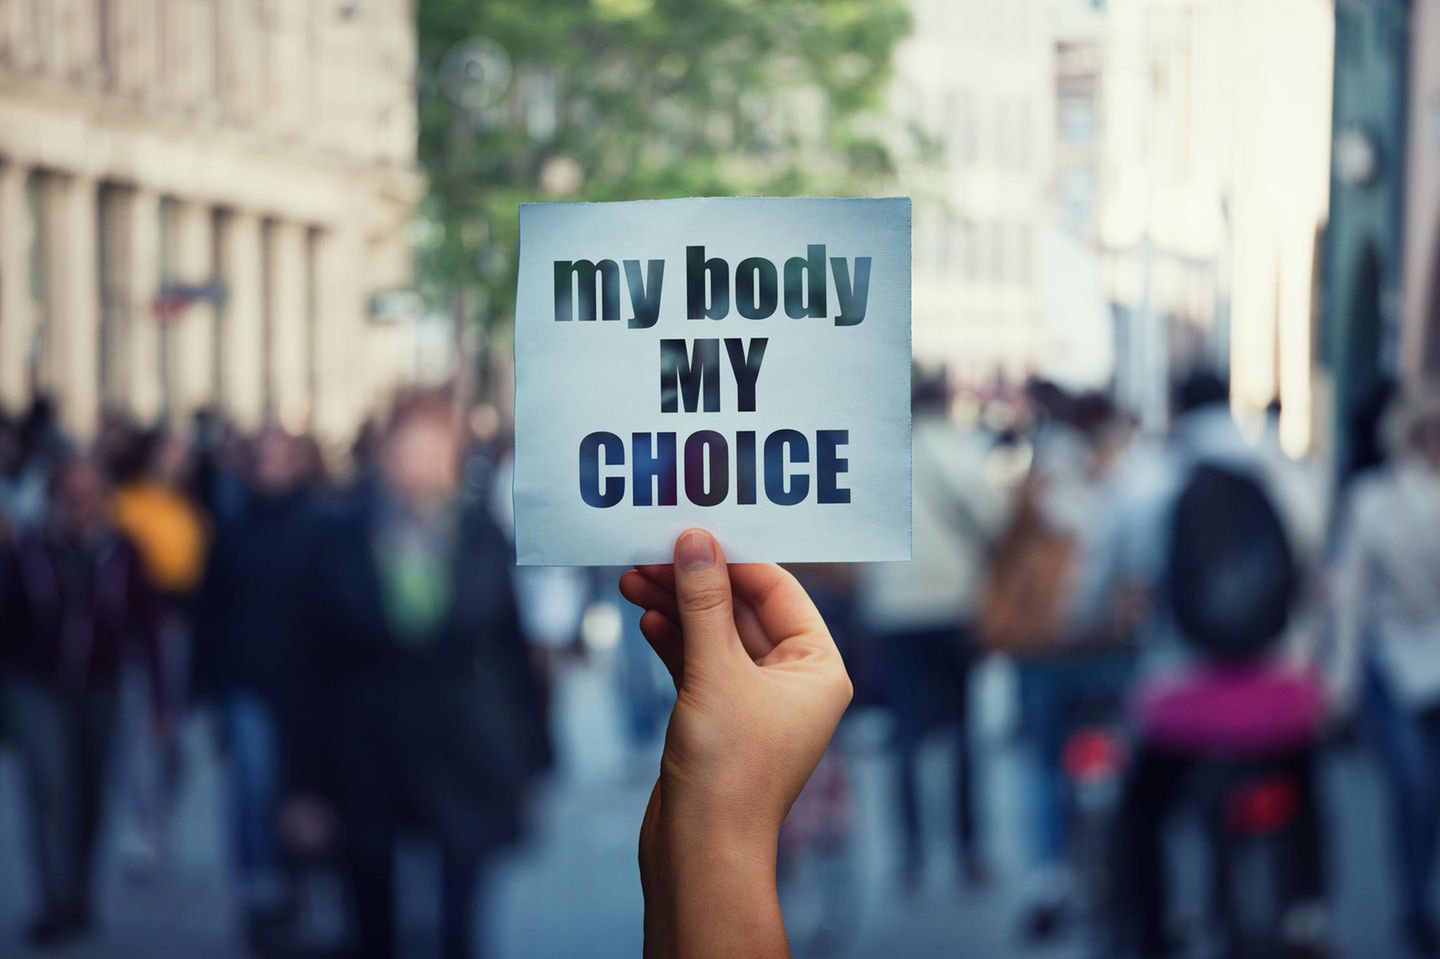 219a: My body my choice